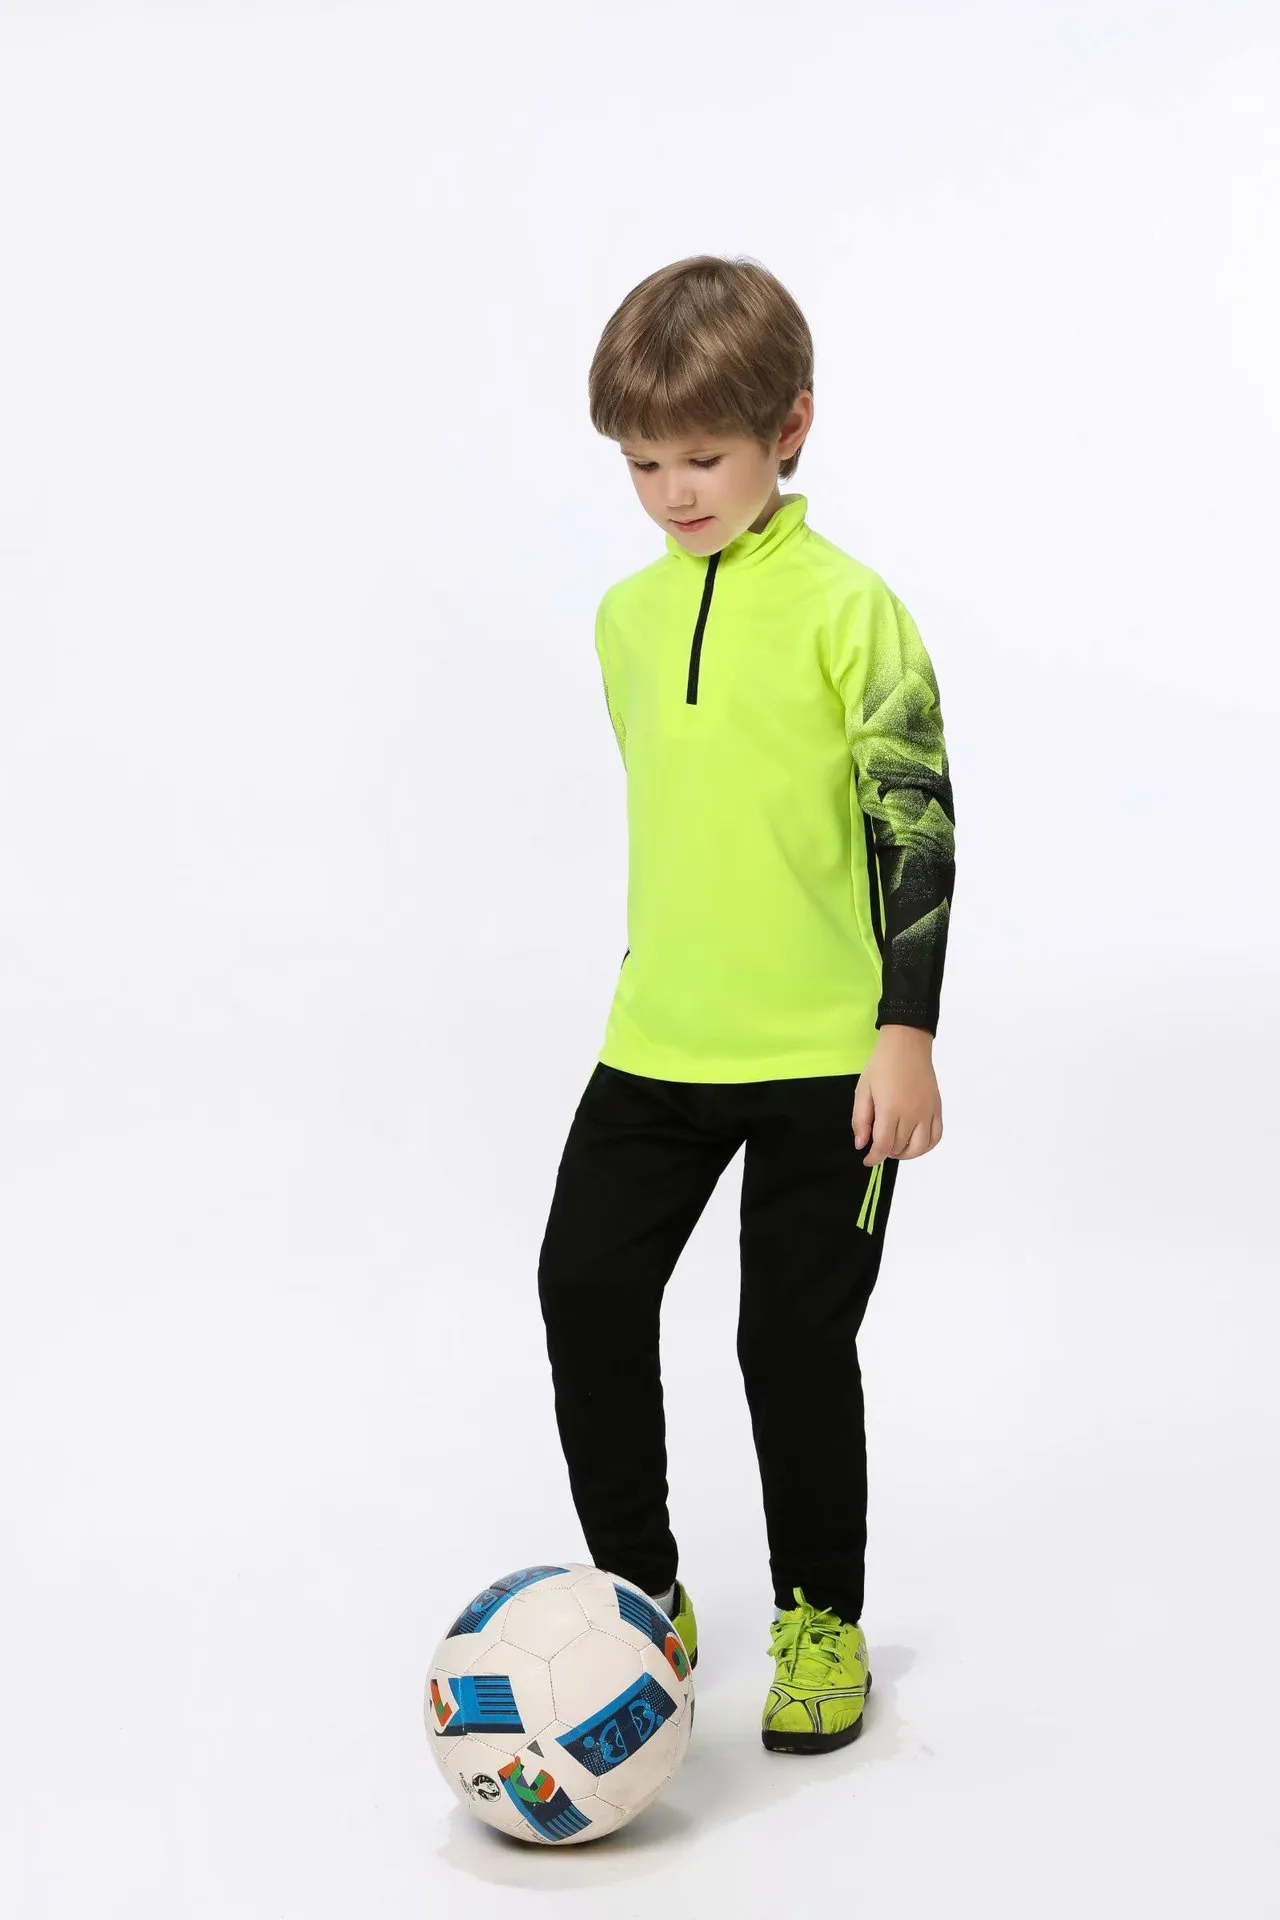 Jessie_kicks #HD61 Oweens Design Fashion Jerseys Kinderkleding Ourtdoor Sportondersteuning QC Foto's vóór verzending